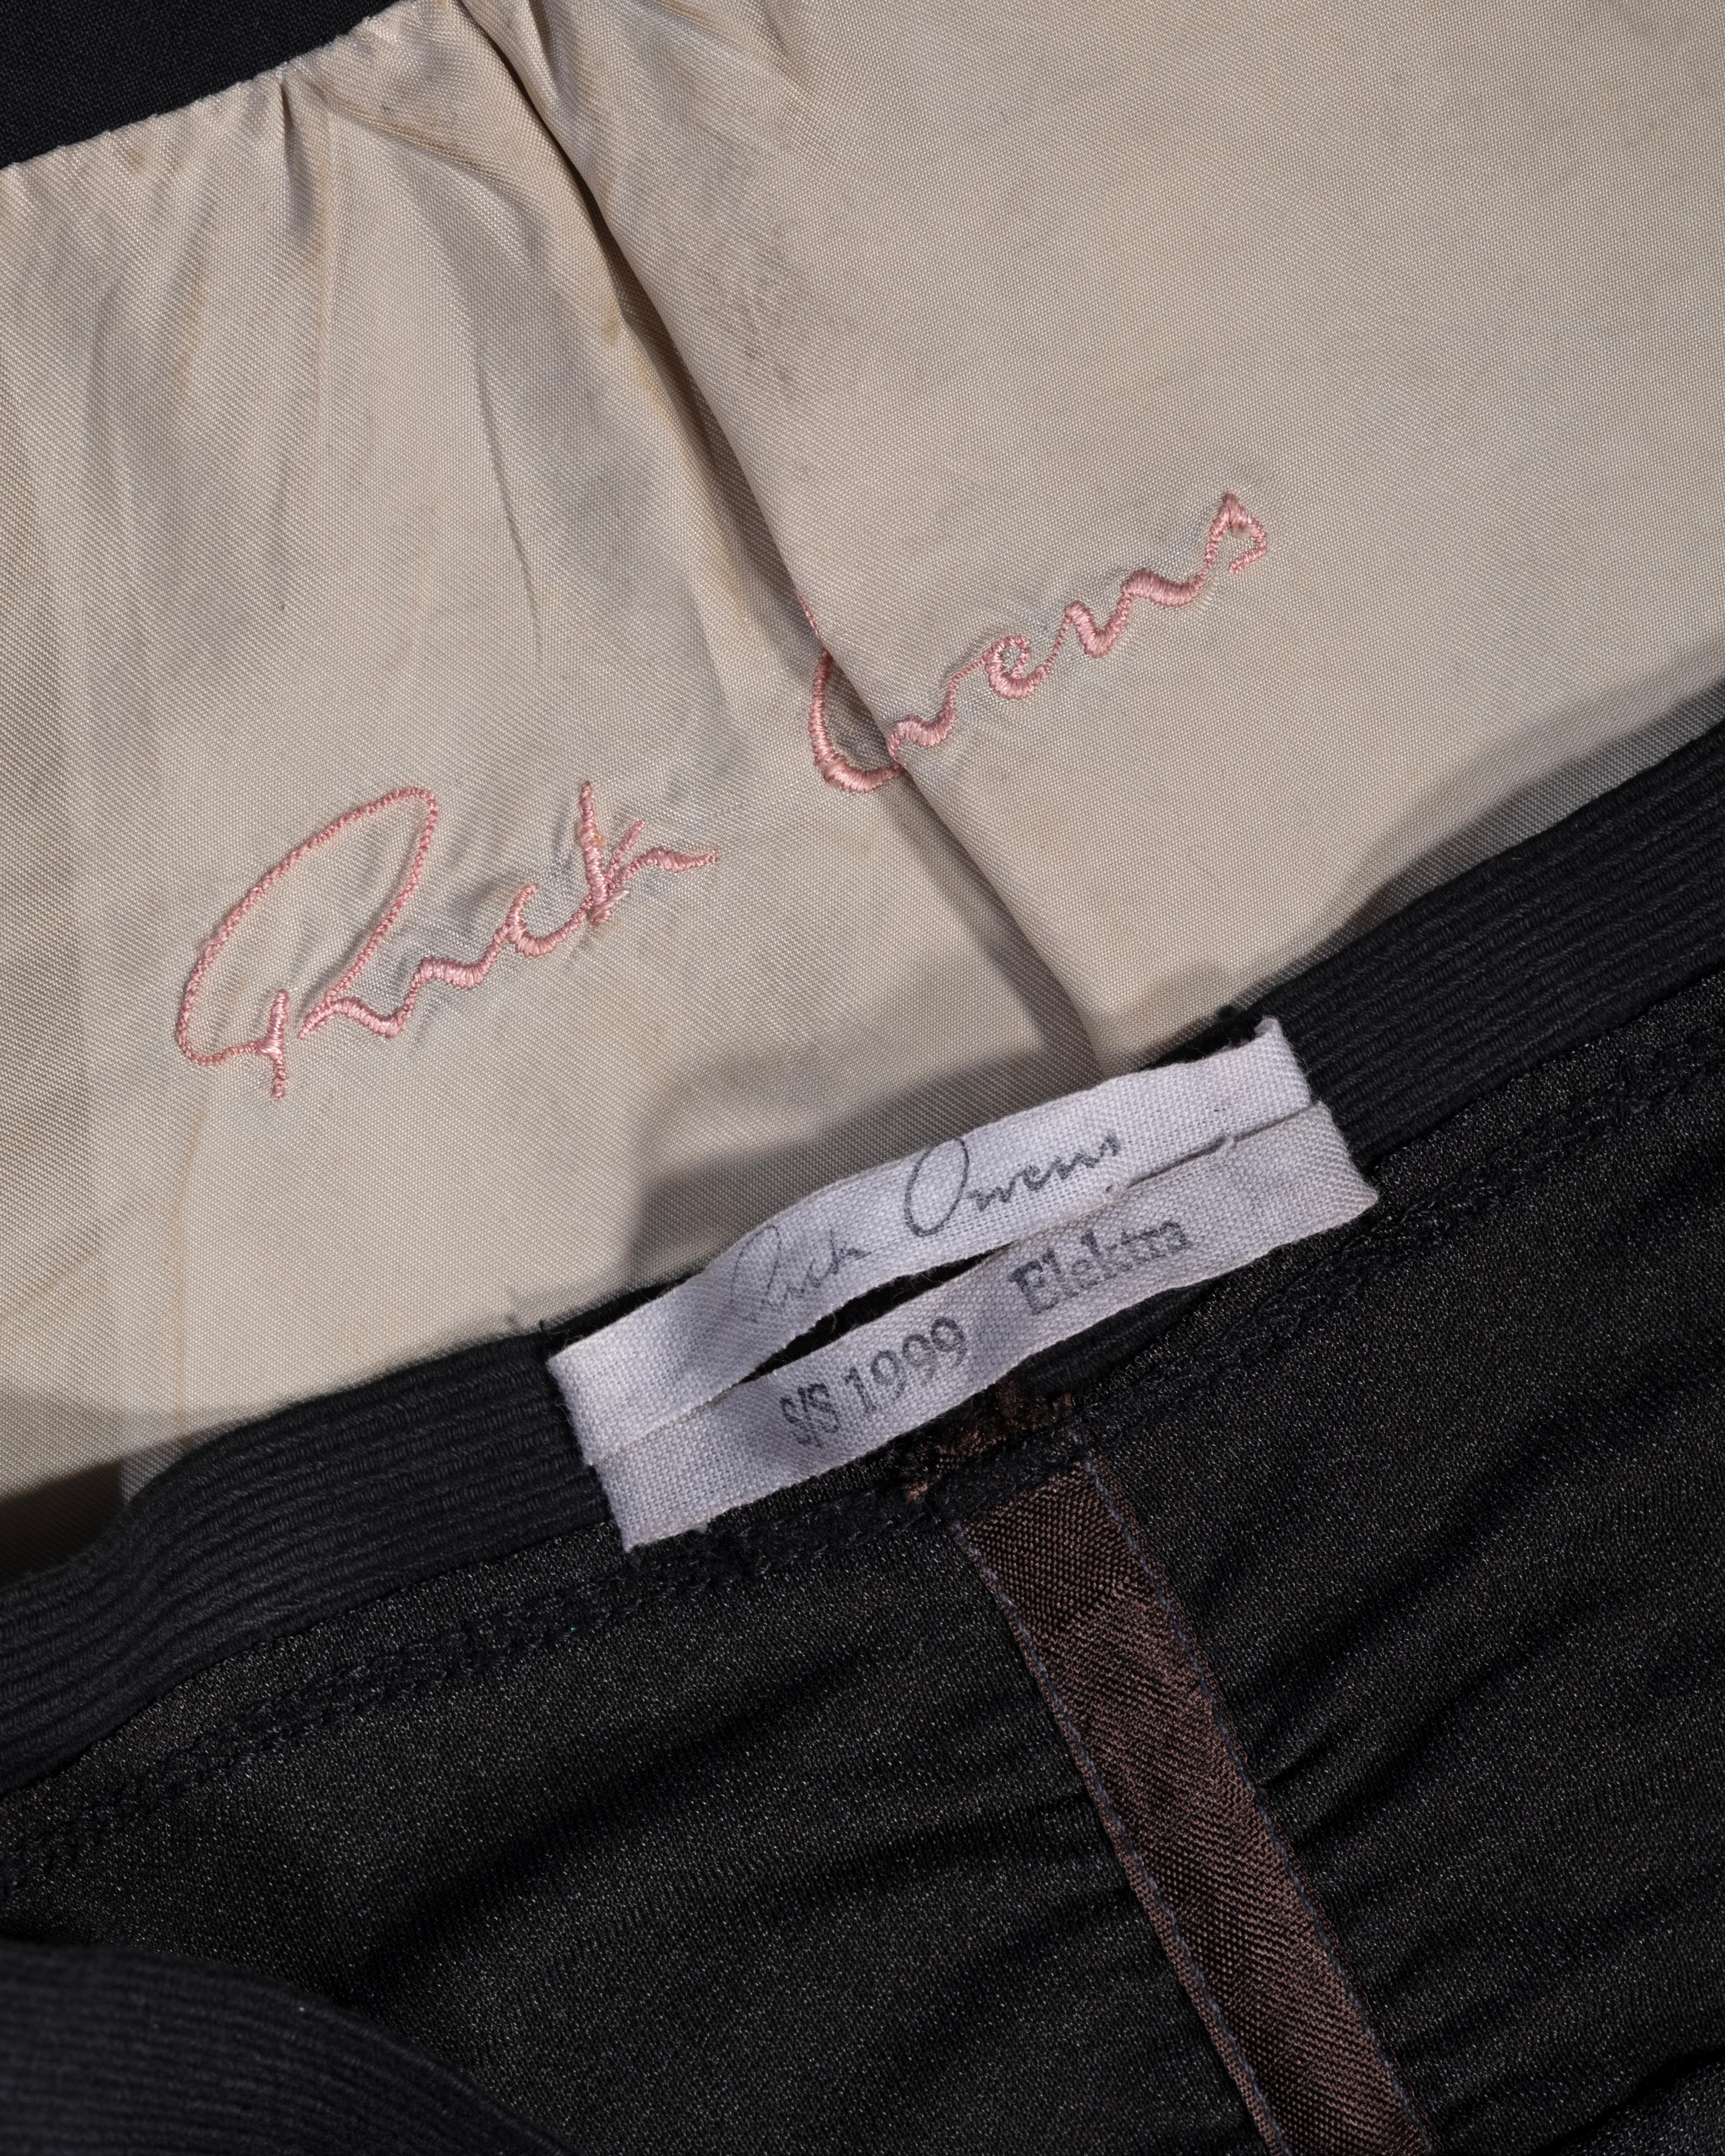 Rick Owens Black Jacket and Bias-Cut Skirt 'Elektra' Ensemble, SS 1999 For Sale 13